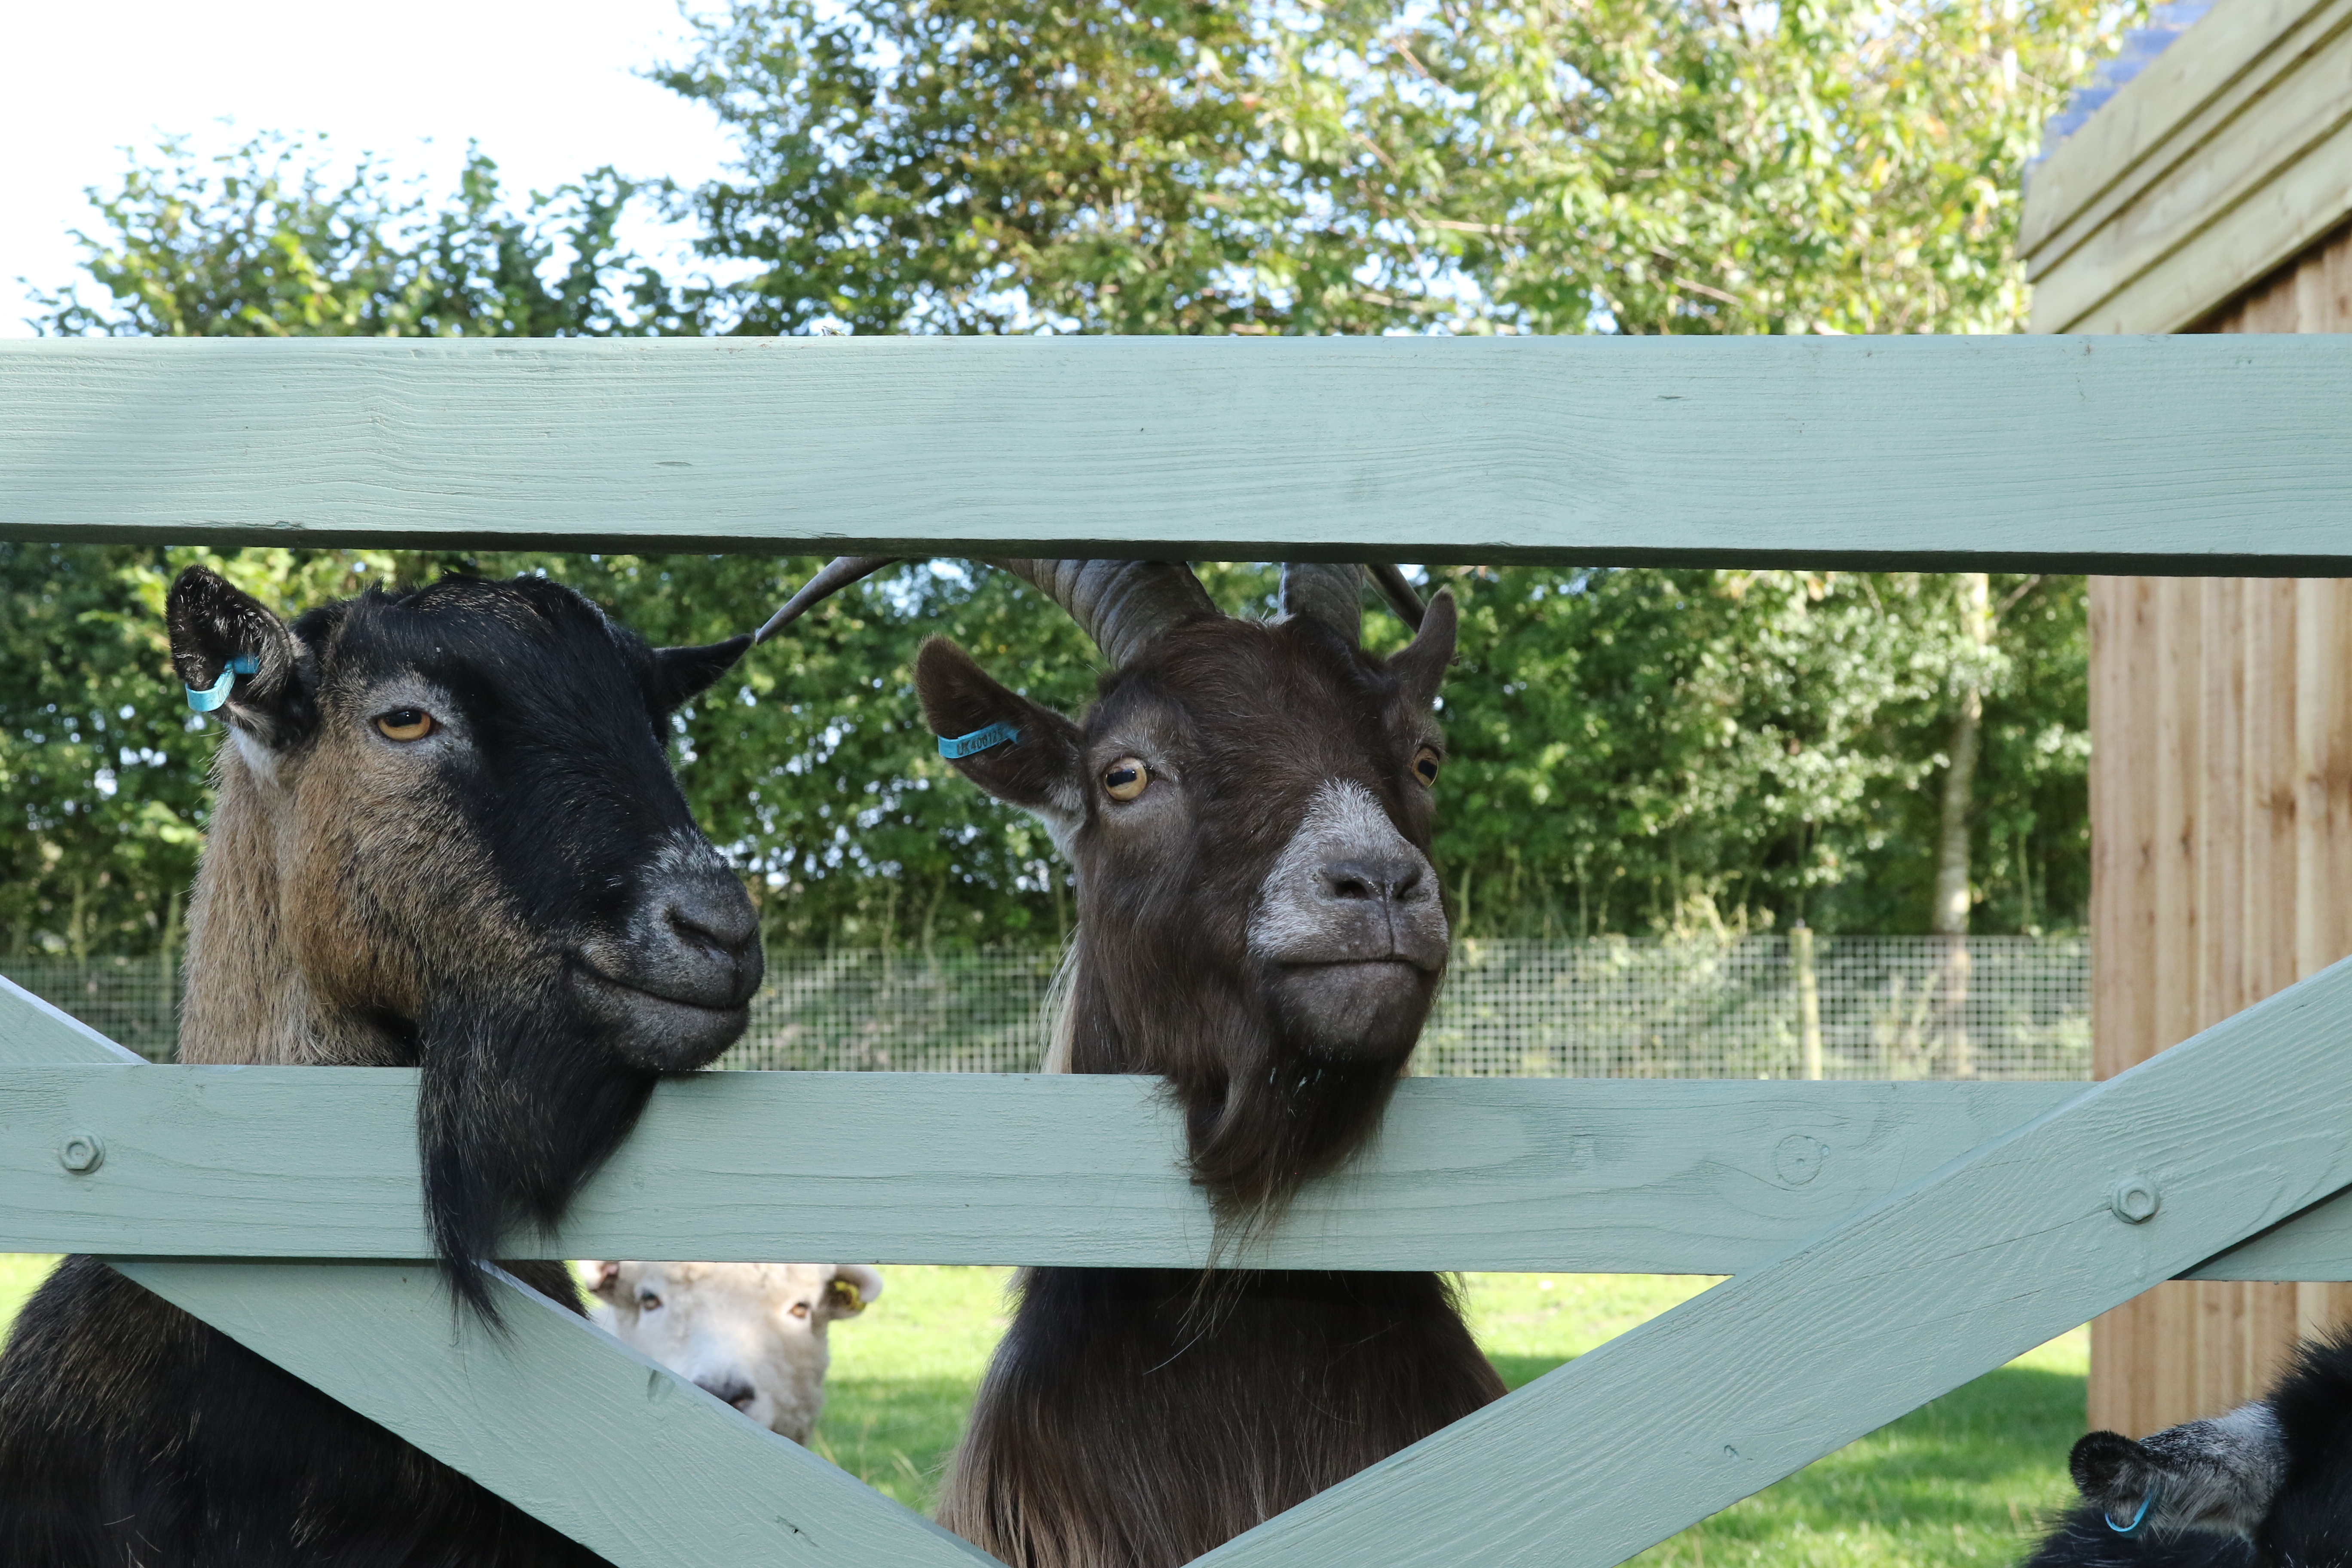 Our goats, Ernie & friends